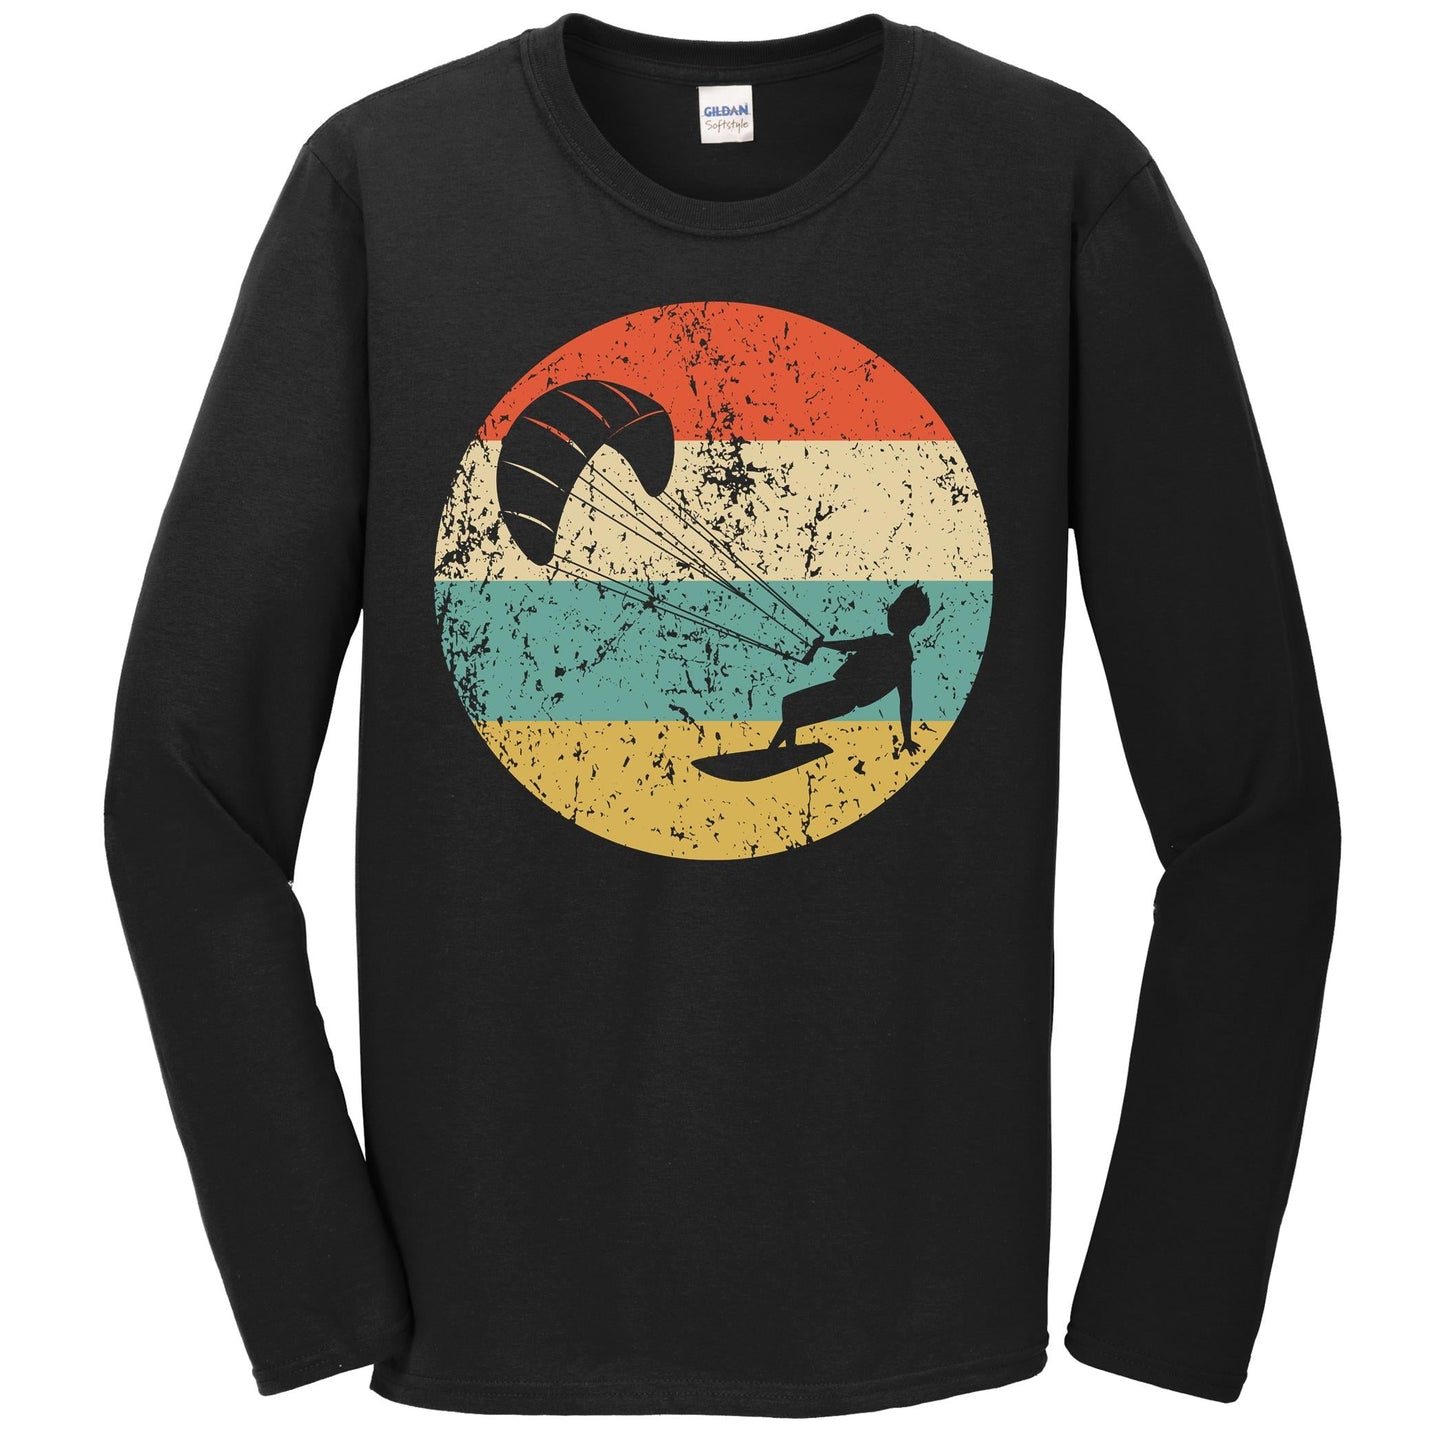 Kite Surfing Shirt - Vintage Retro Kite Surfer Long Sleeve T-Shirt